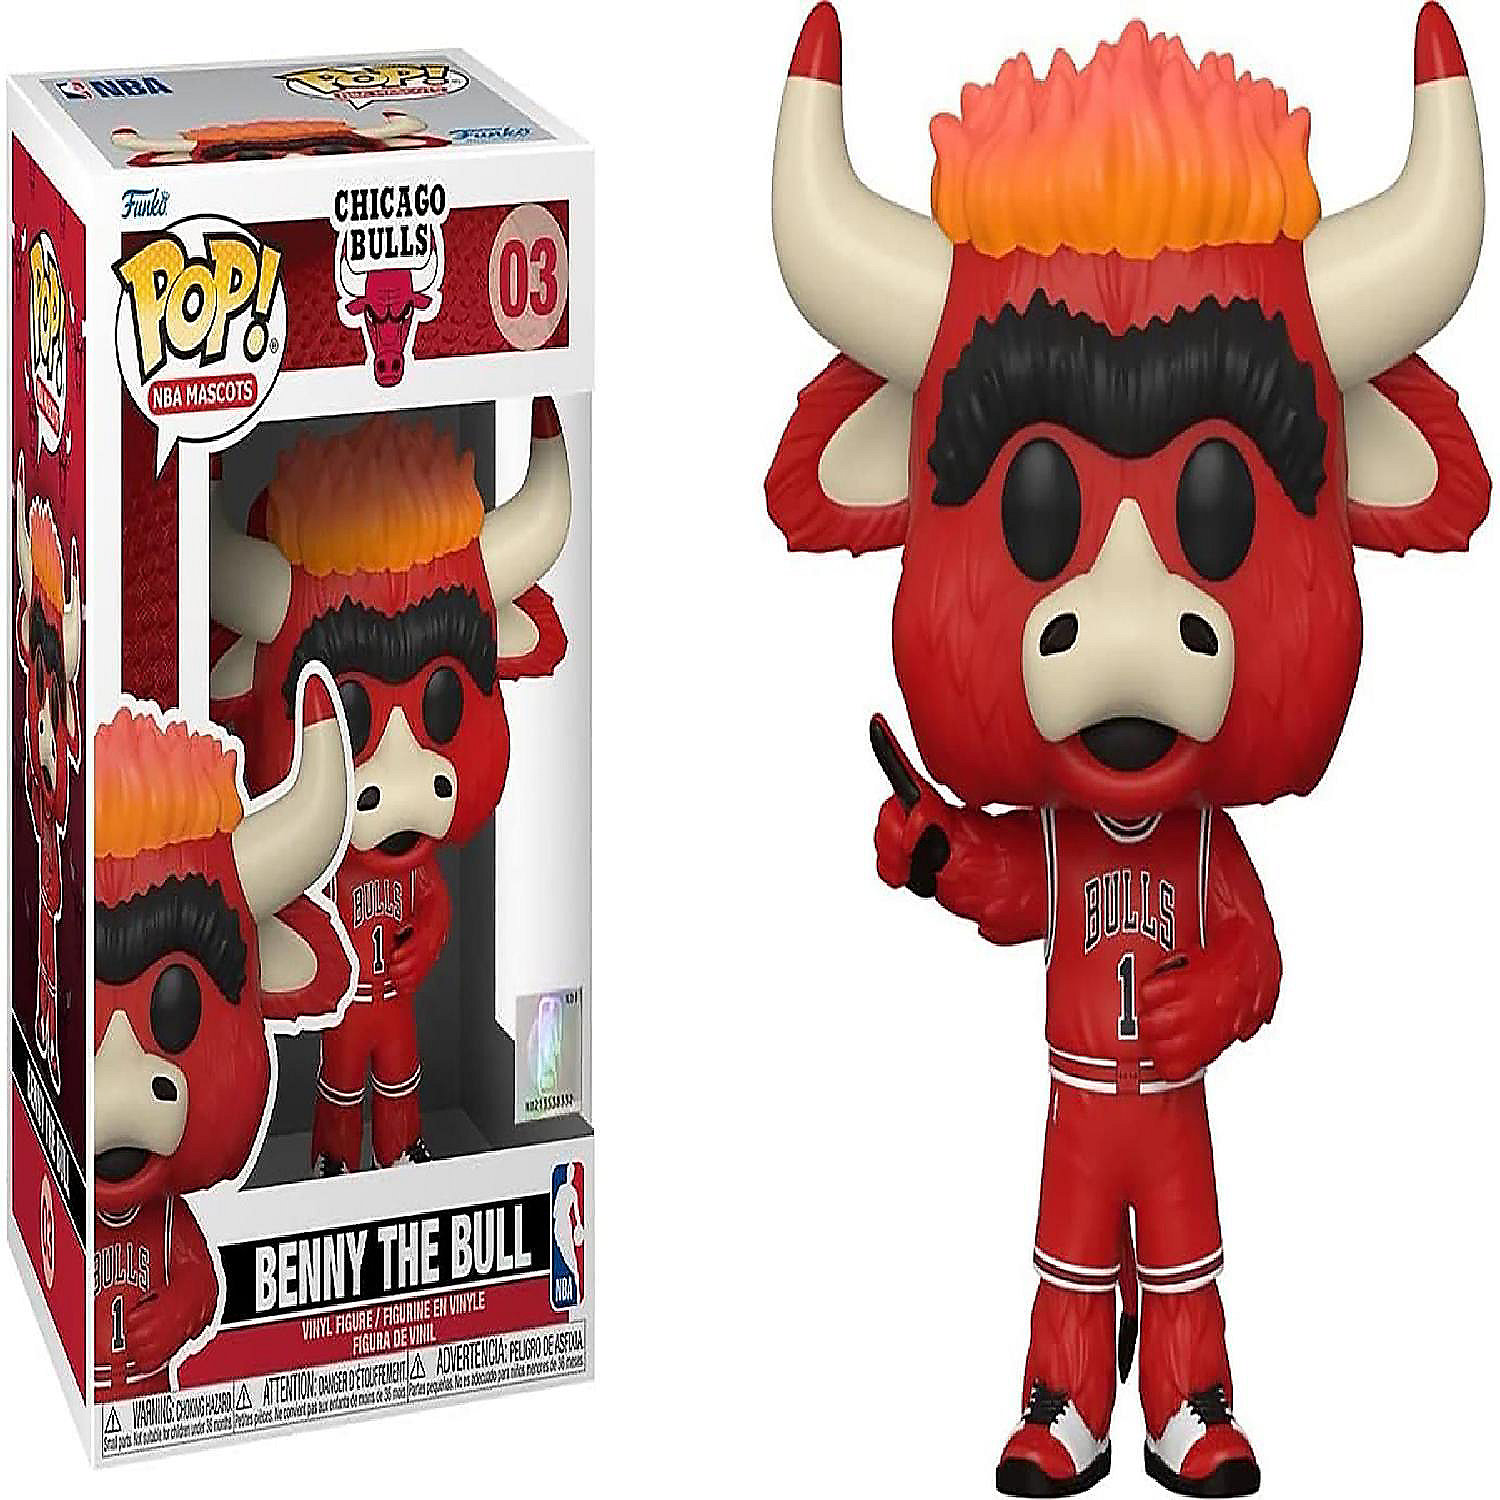 Chicago Bulls POP Mascot Vinyl Figure Benny the Bull Oriental Trading